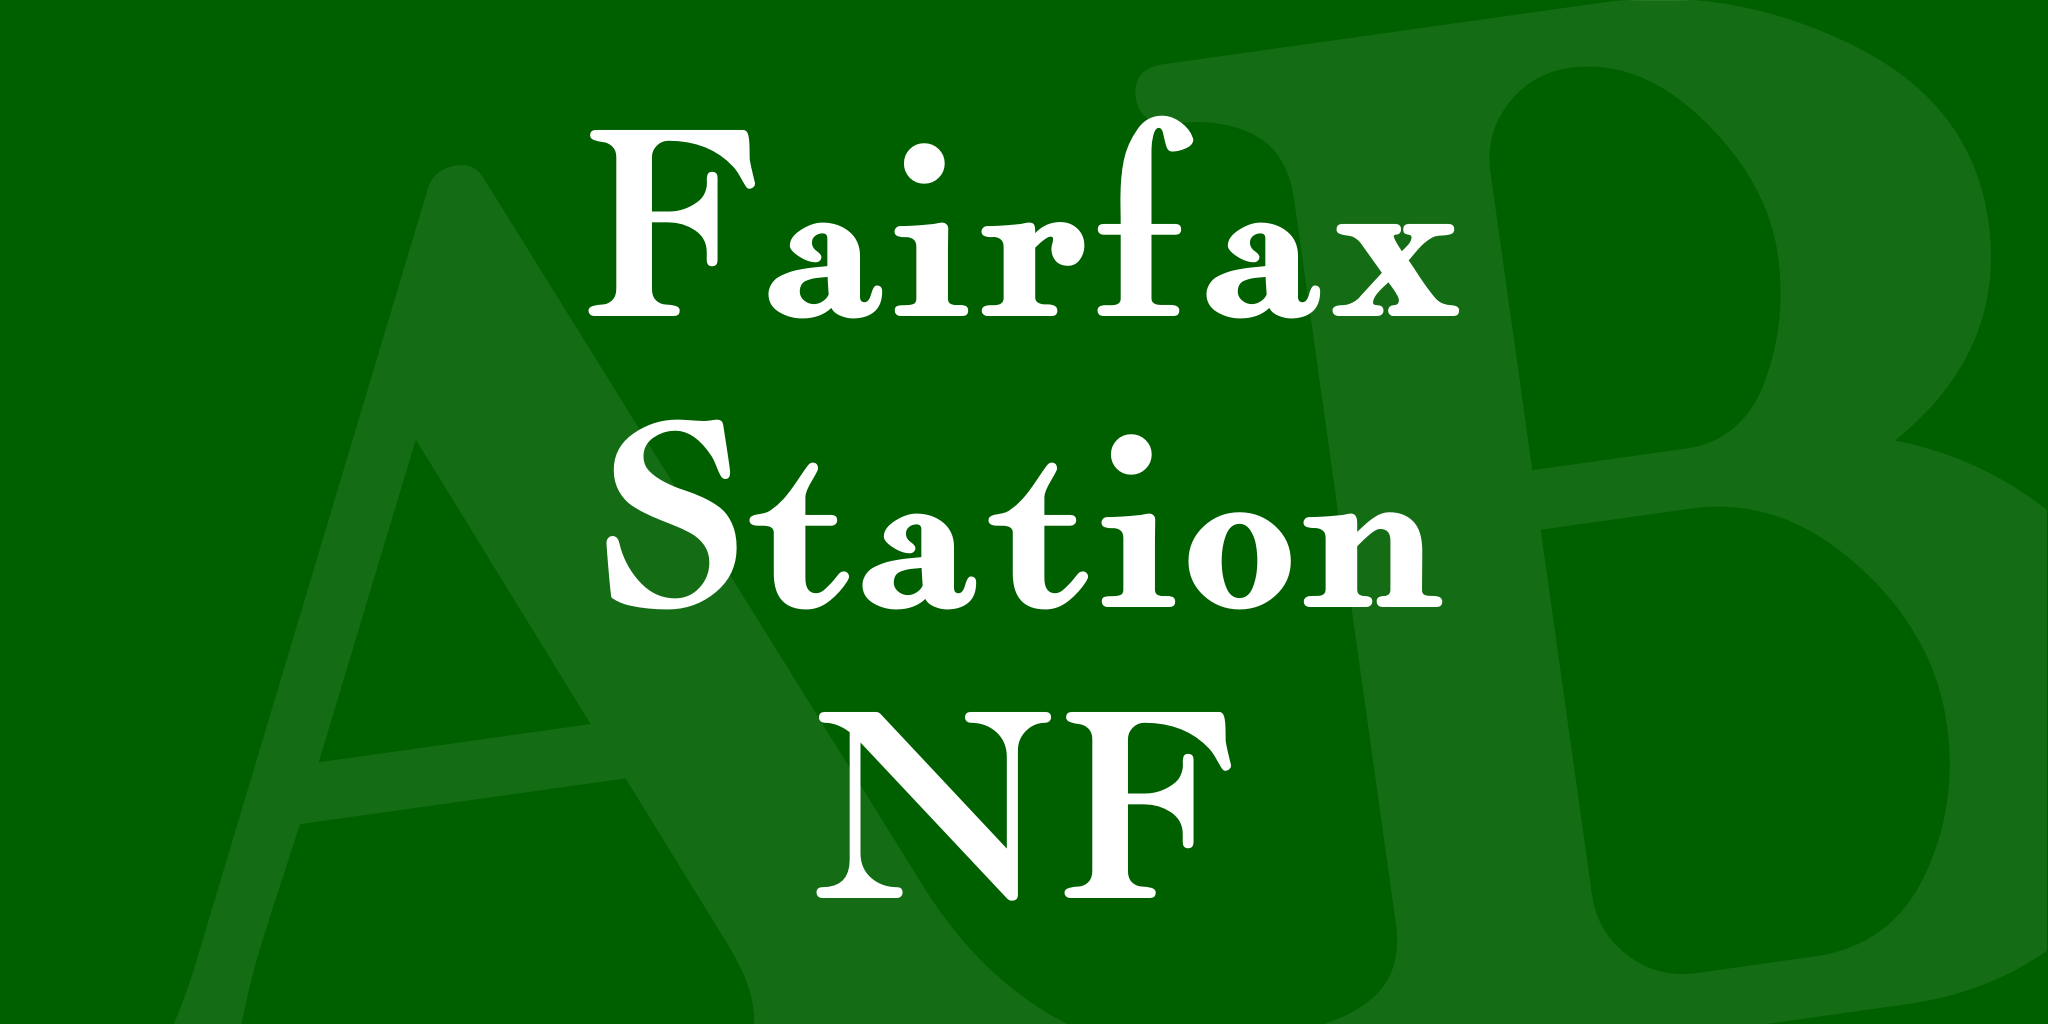 Fairfax Station Nf